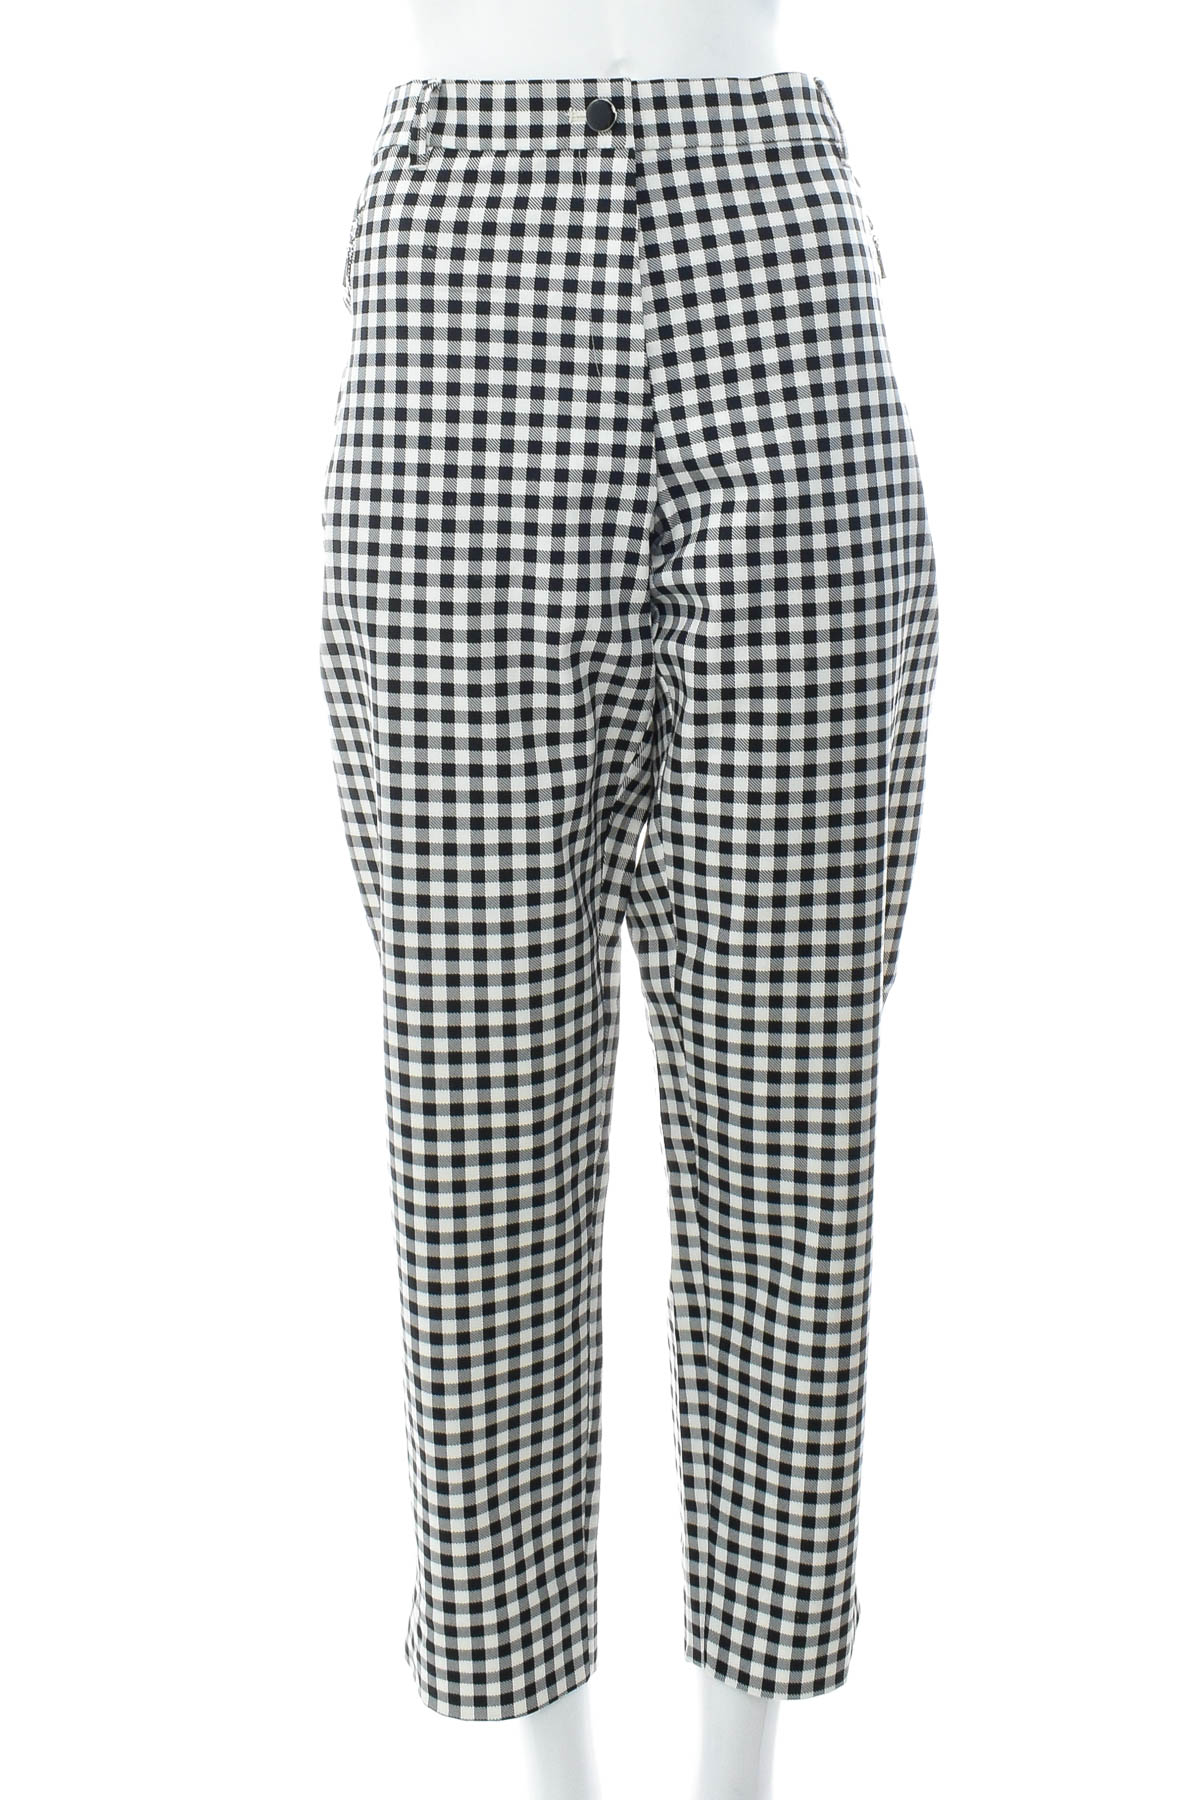 Women's trousers - Bpc selection bonprix collection - 0